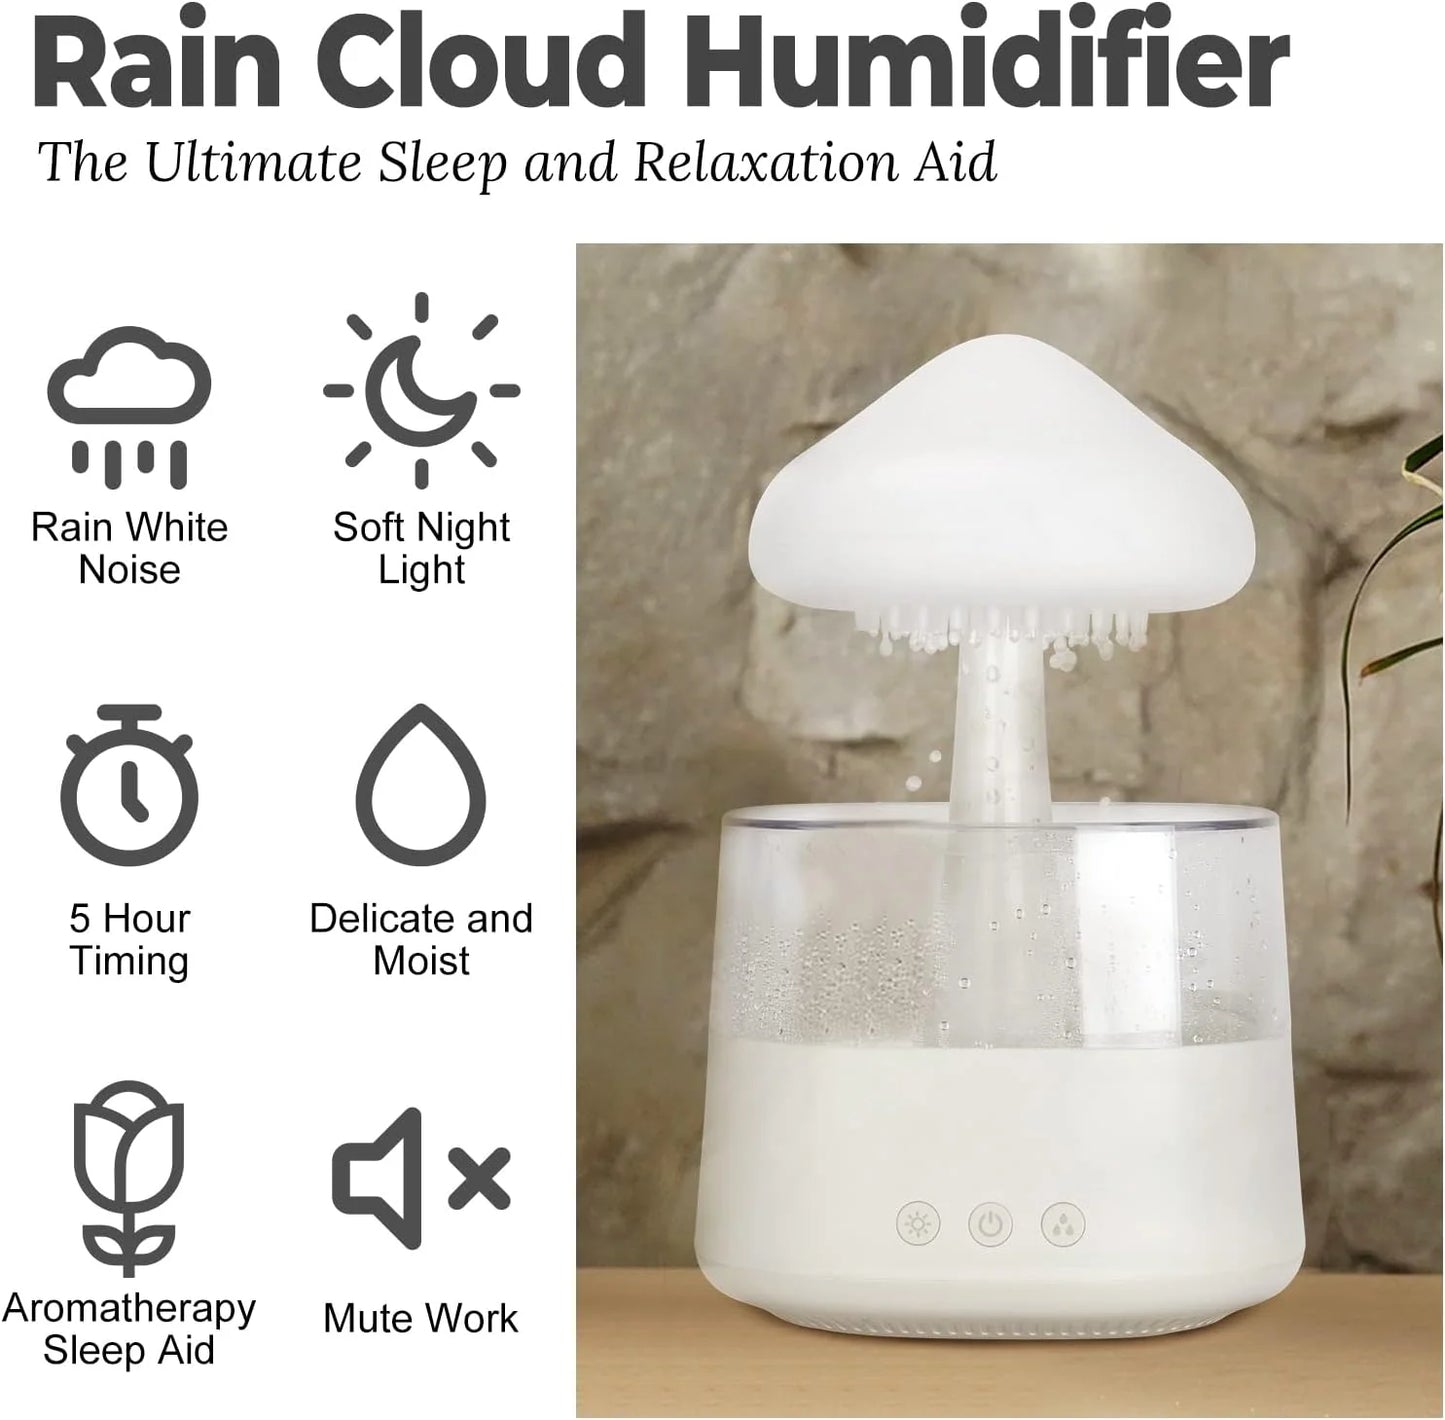 Rain Cloud Humidifier (50%OFF 🔥)